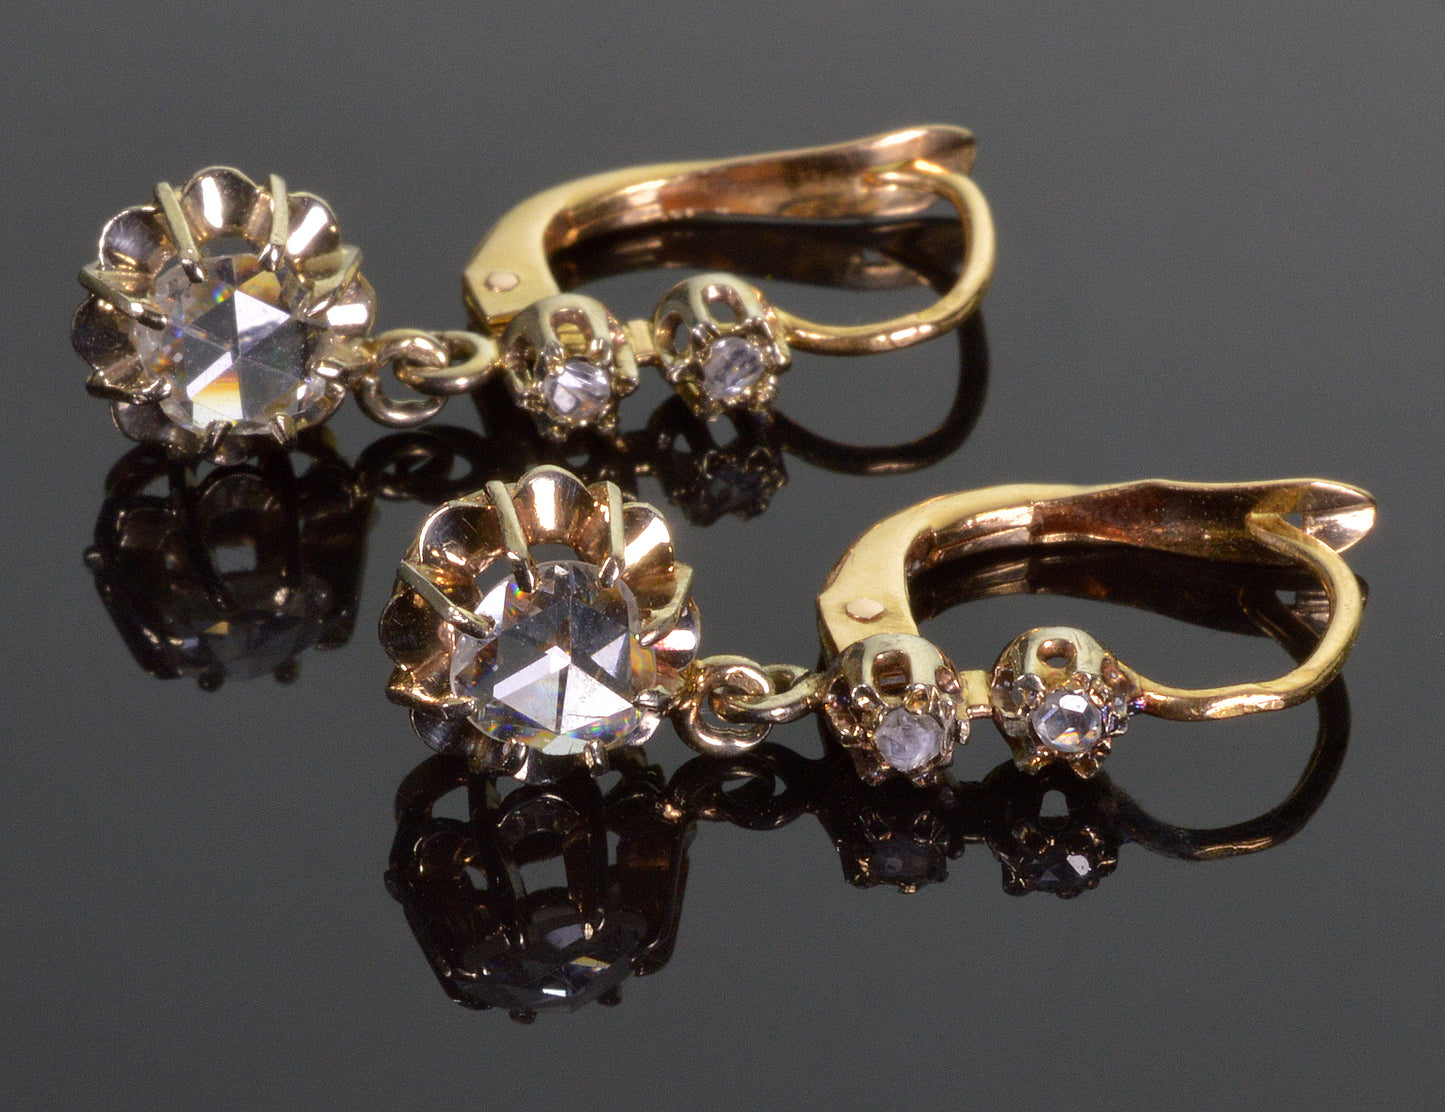 Antique French 18K Gold 0.5 CTW Diamond Earrings C.1890